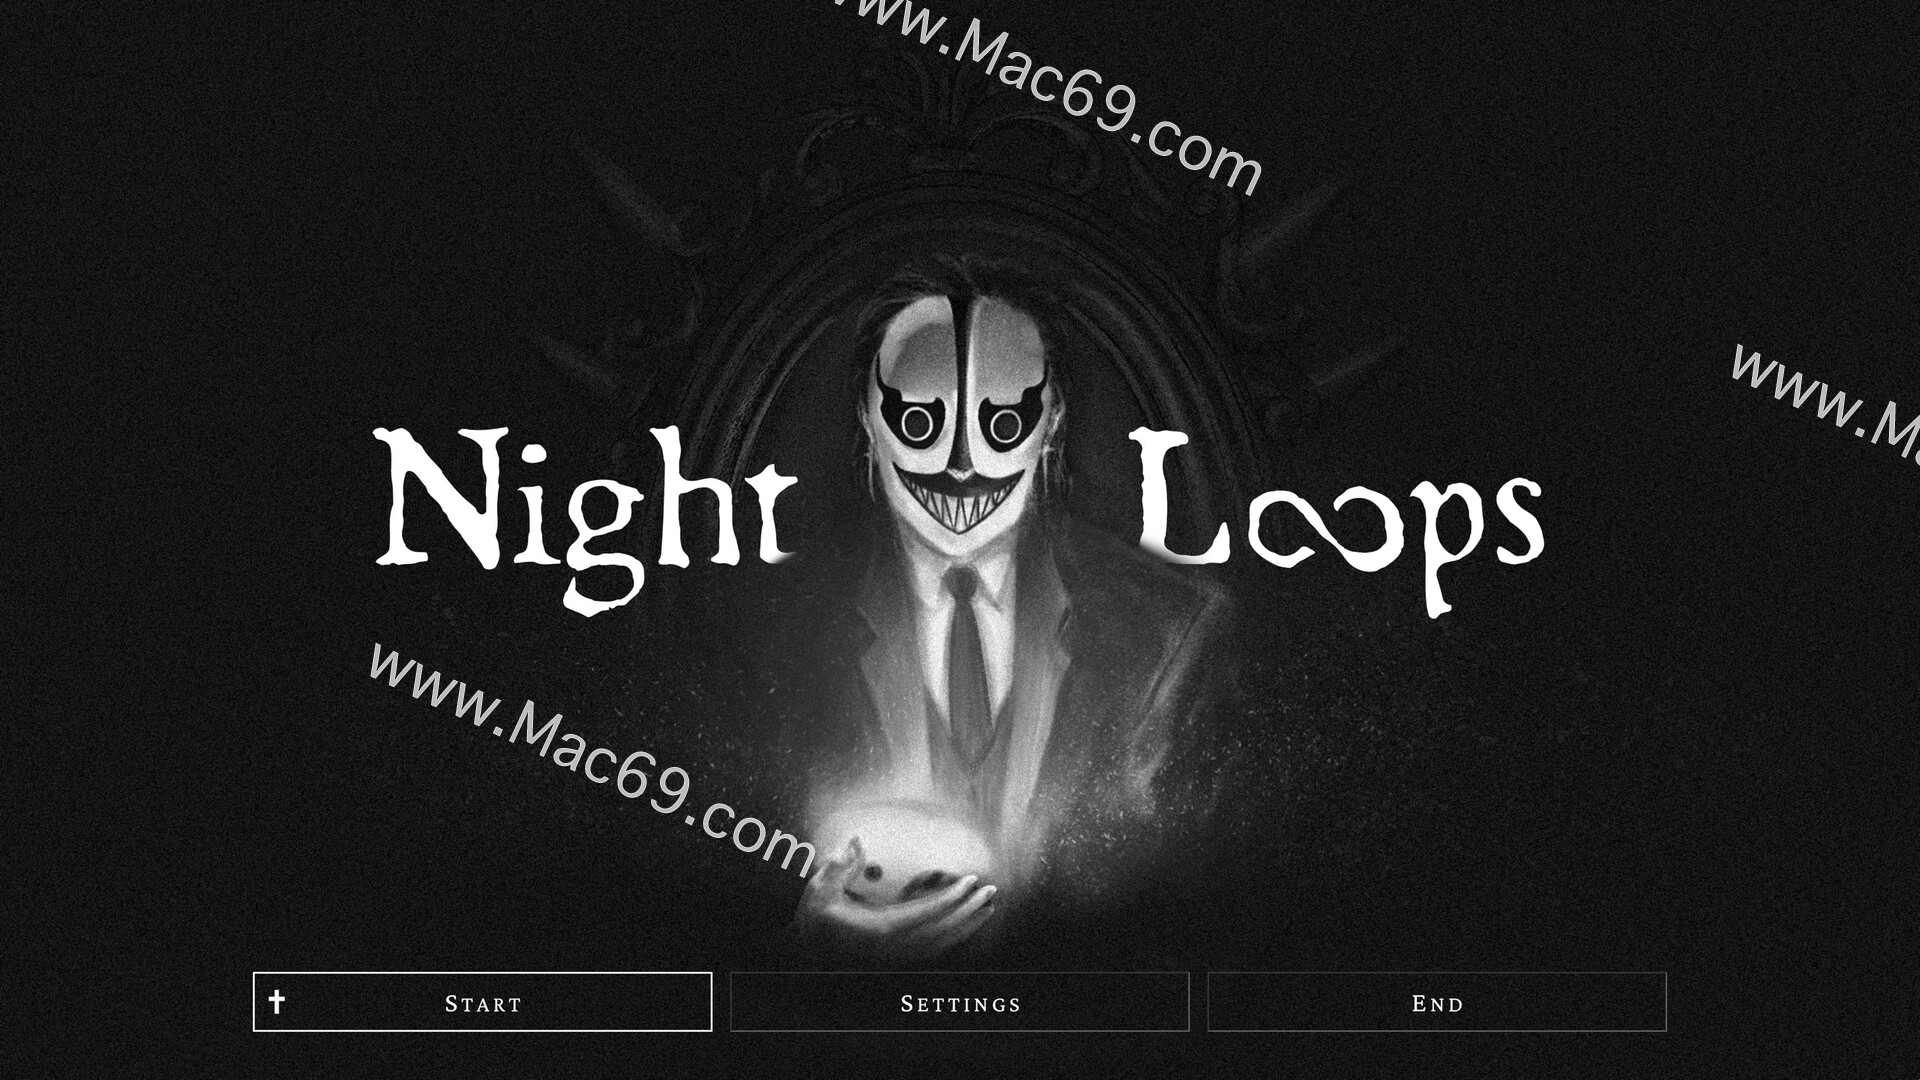 夜间循环Night Loops for Mac(恐怖冒险游戏)